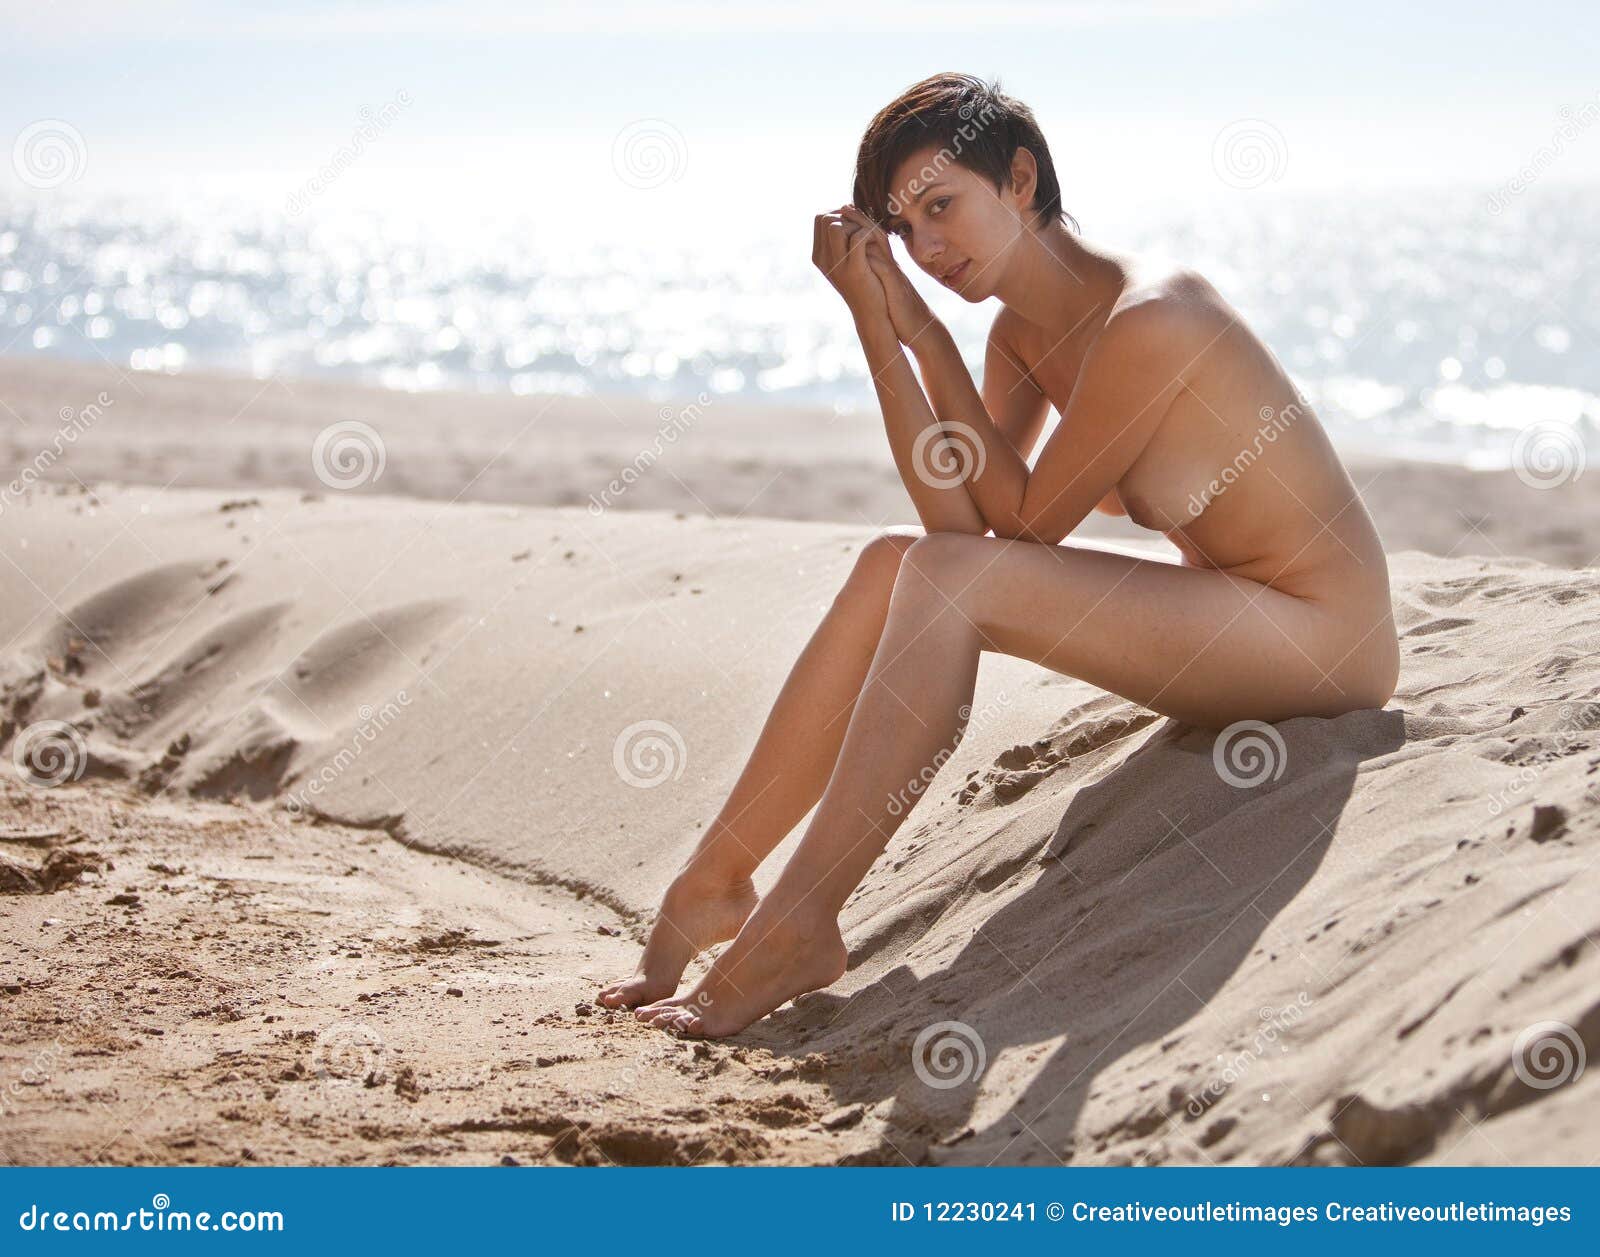 Naked Women Beach